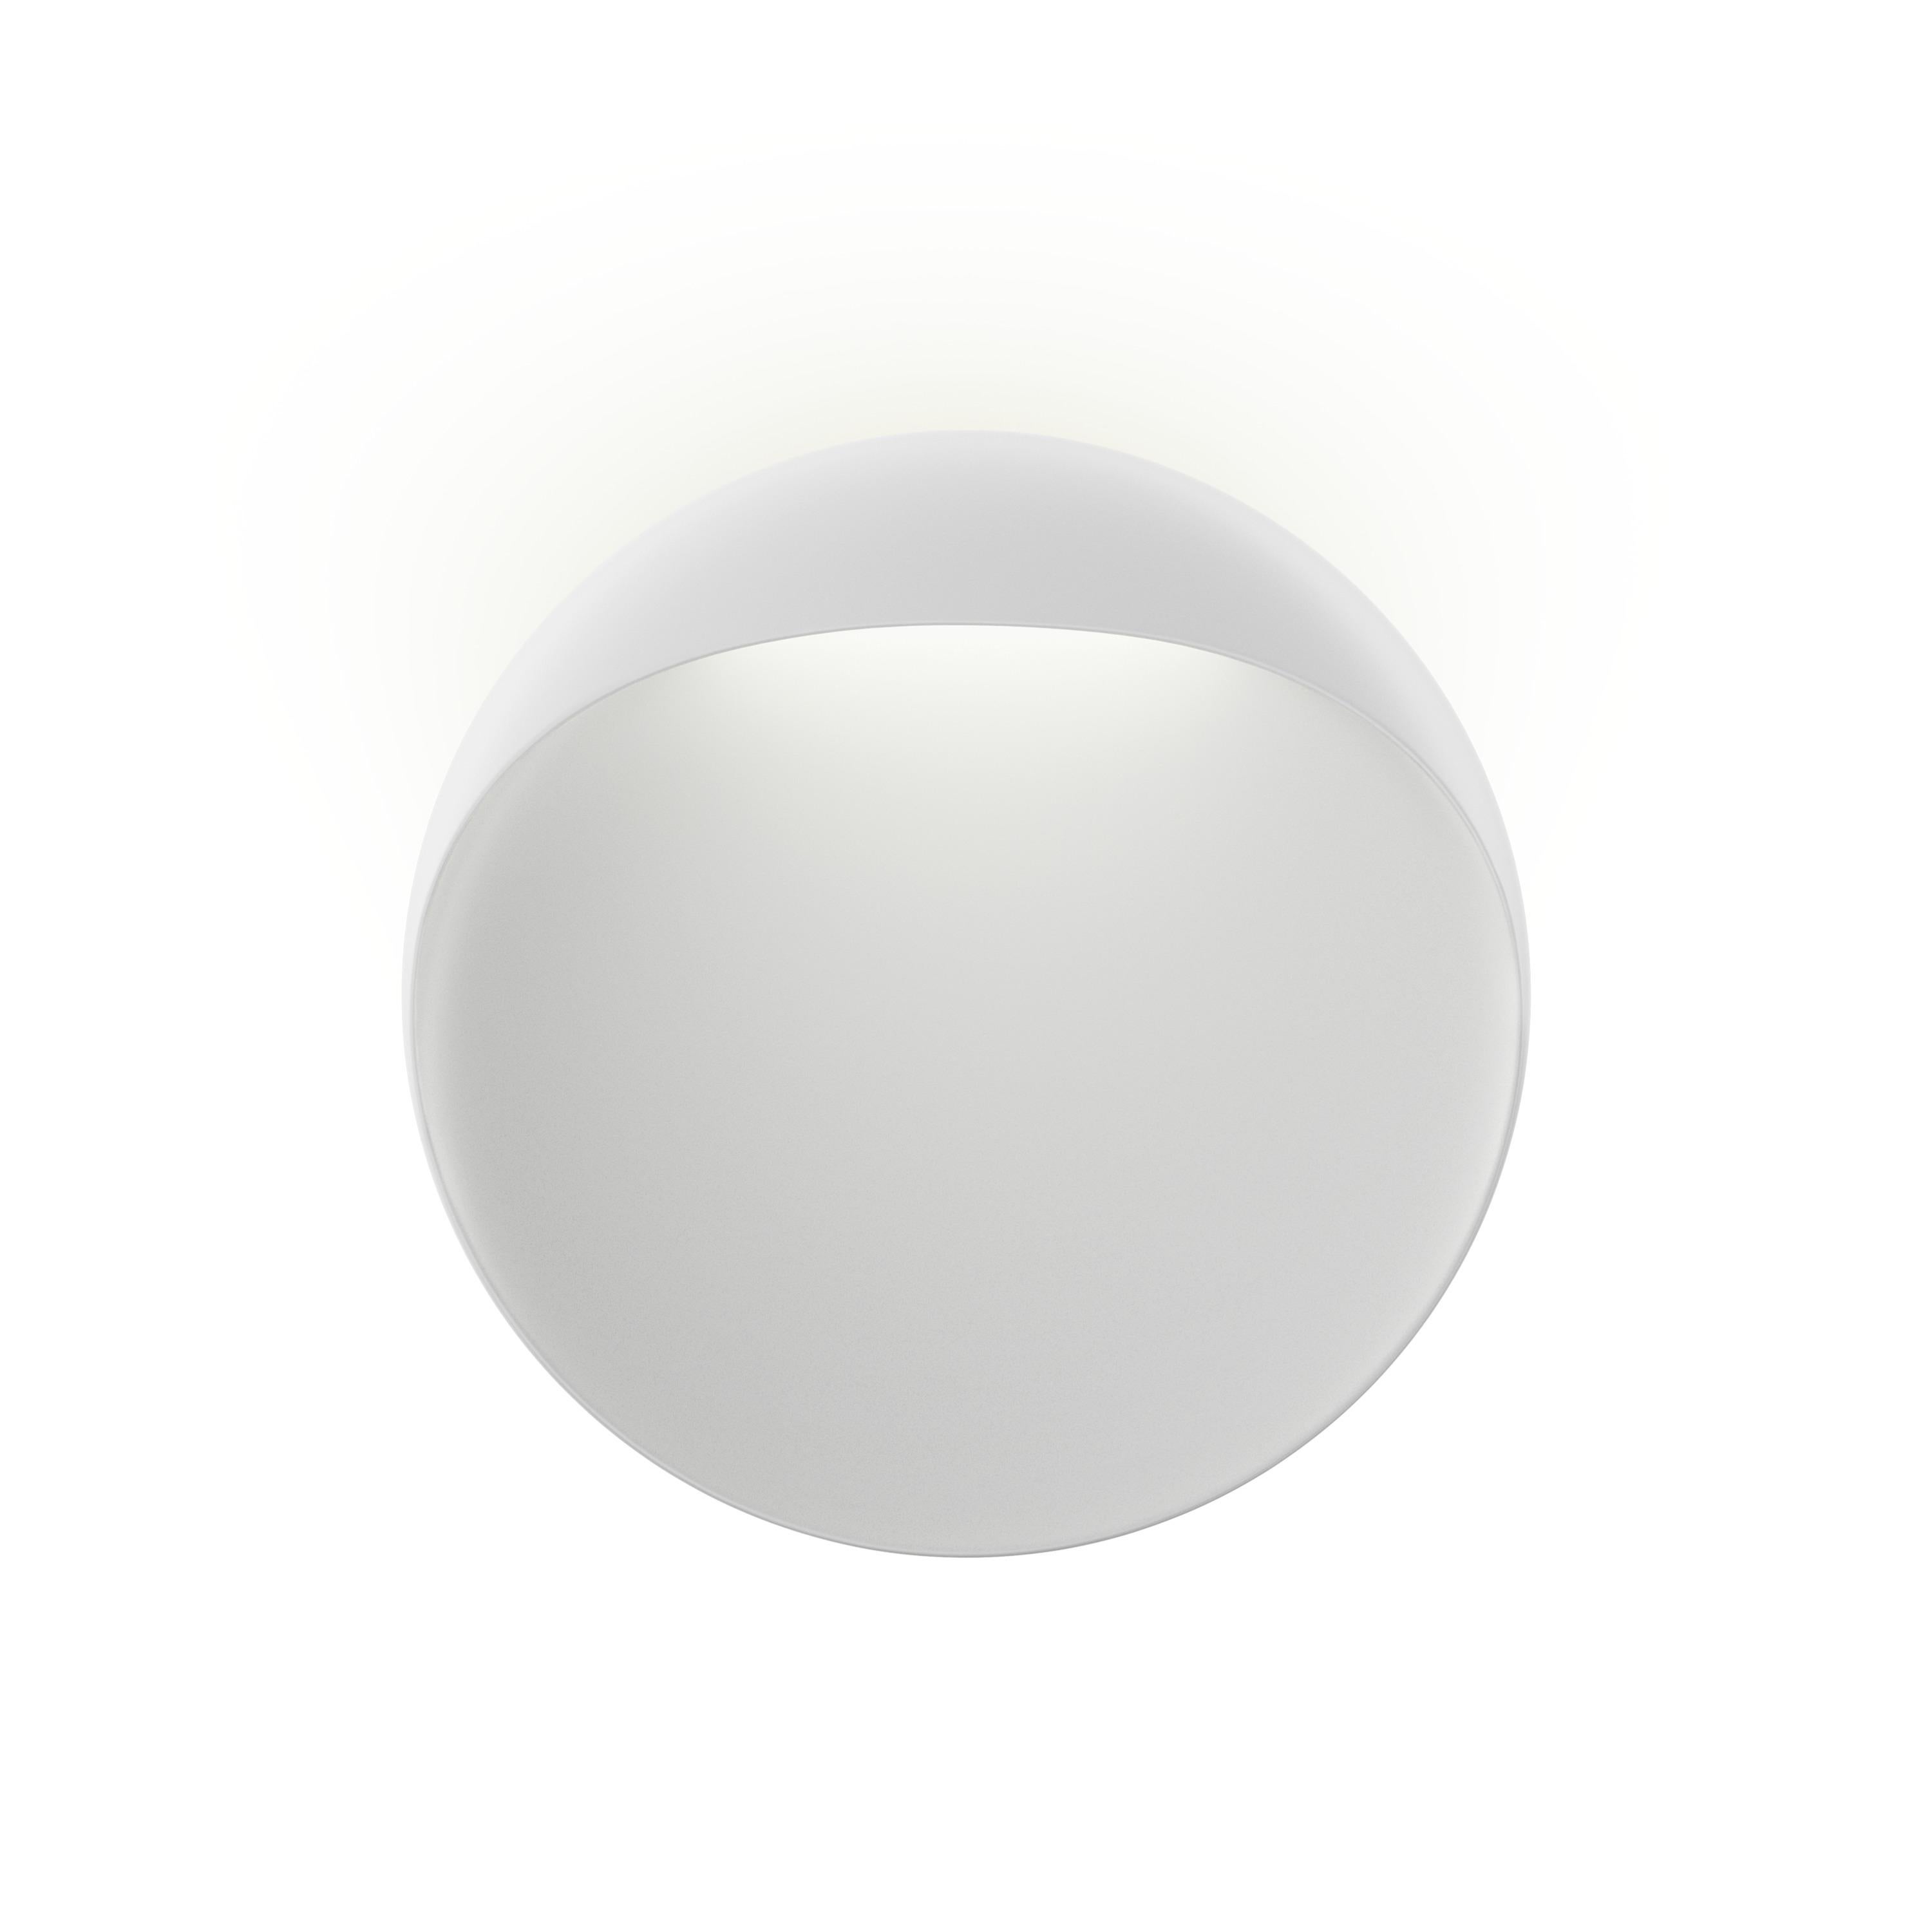 For Sale: White (white.jpg) Louis Poulsen Outdoor Medium Flindt Wall Lamp by Christian Flindt